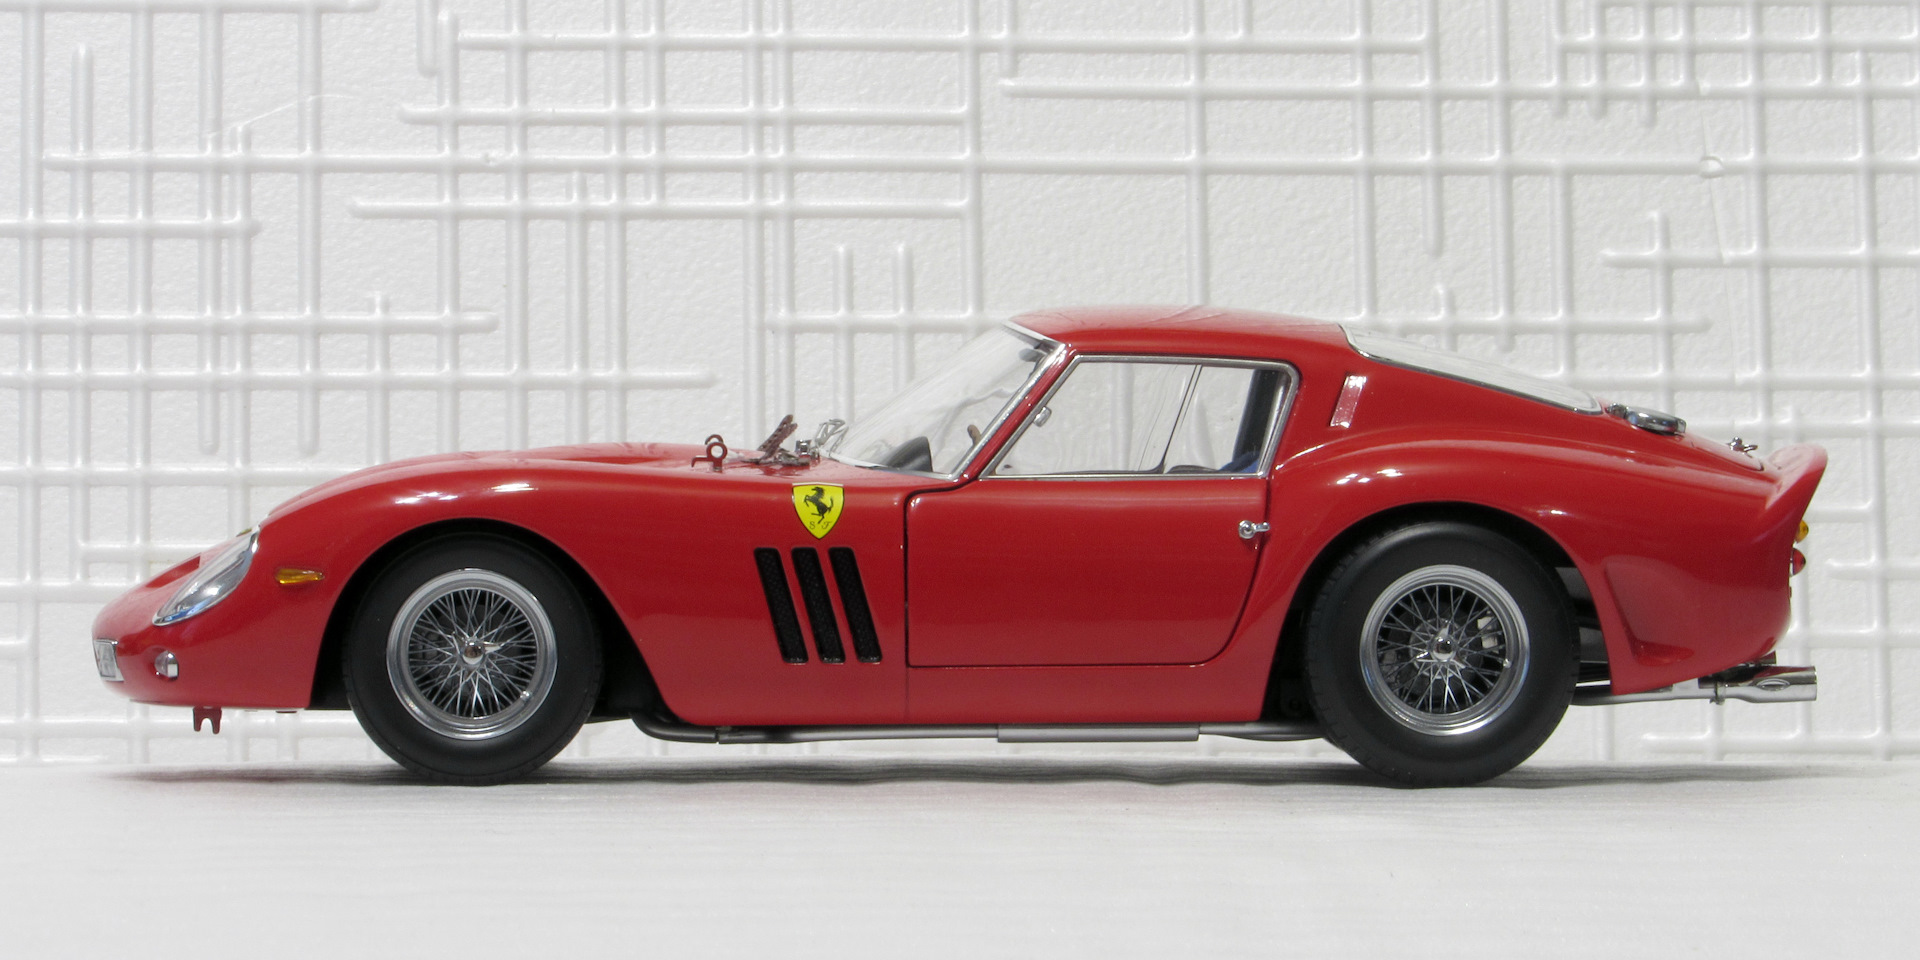 Ferrari gto 1962. Ferrari 250 GTO 1962. Ferrari 250 GTO. Ferrari 250 GTO 1963. 1962 Ferrari 250 GTO Kyosho.